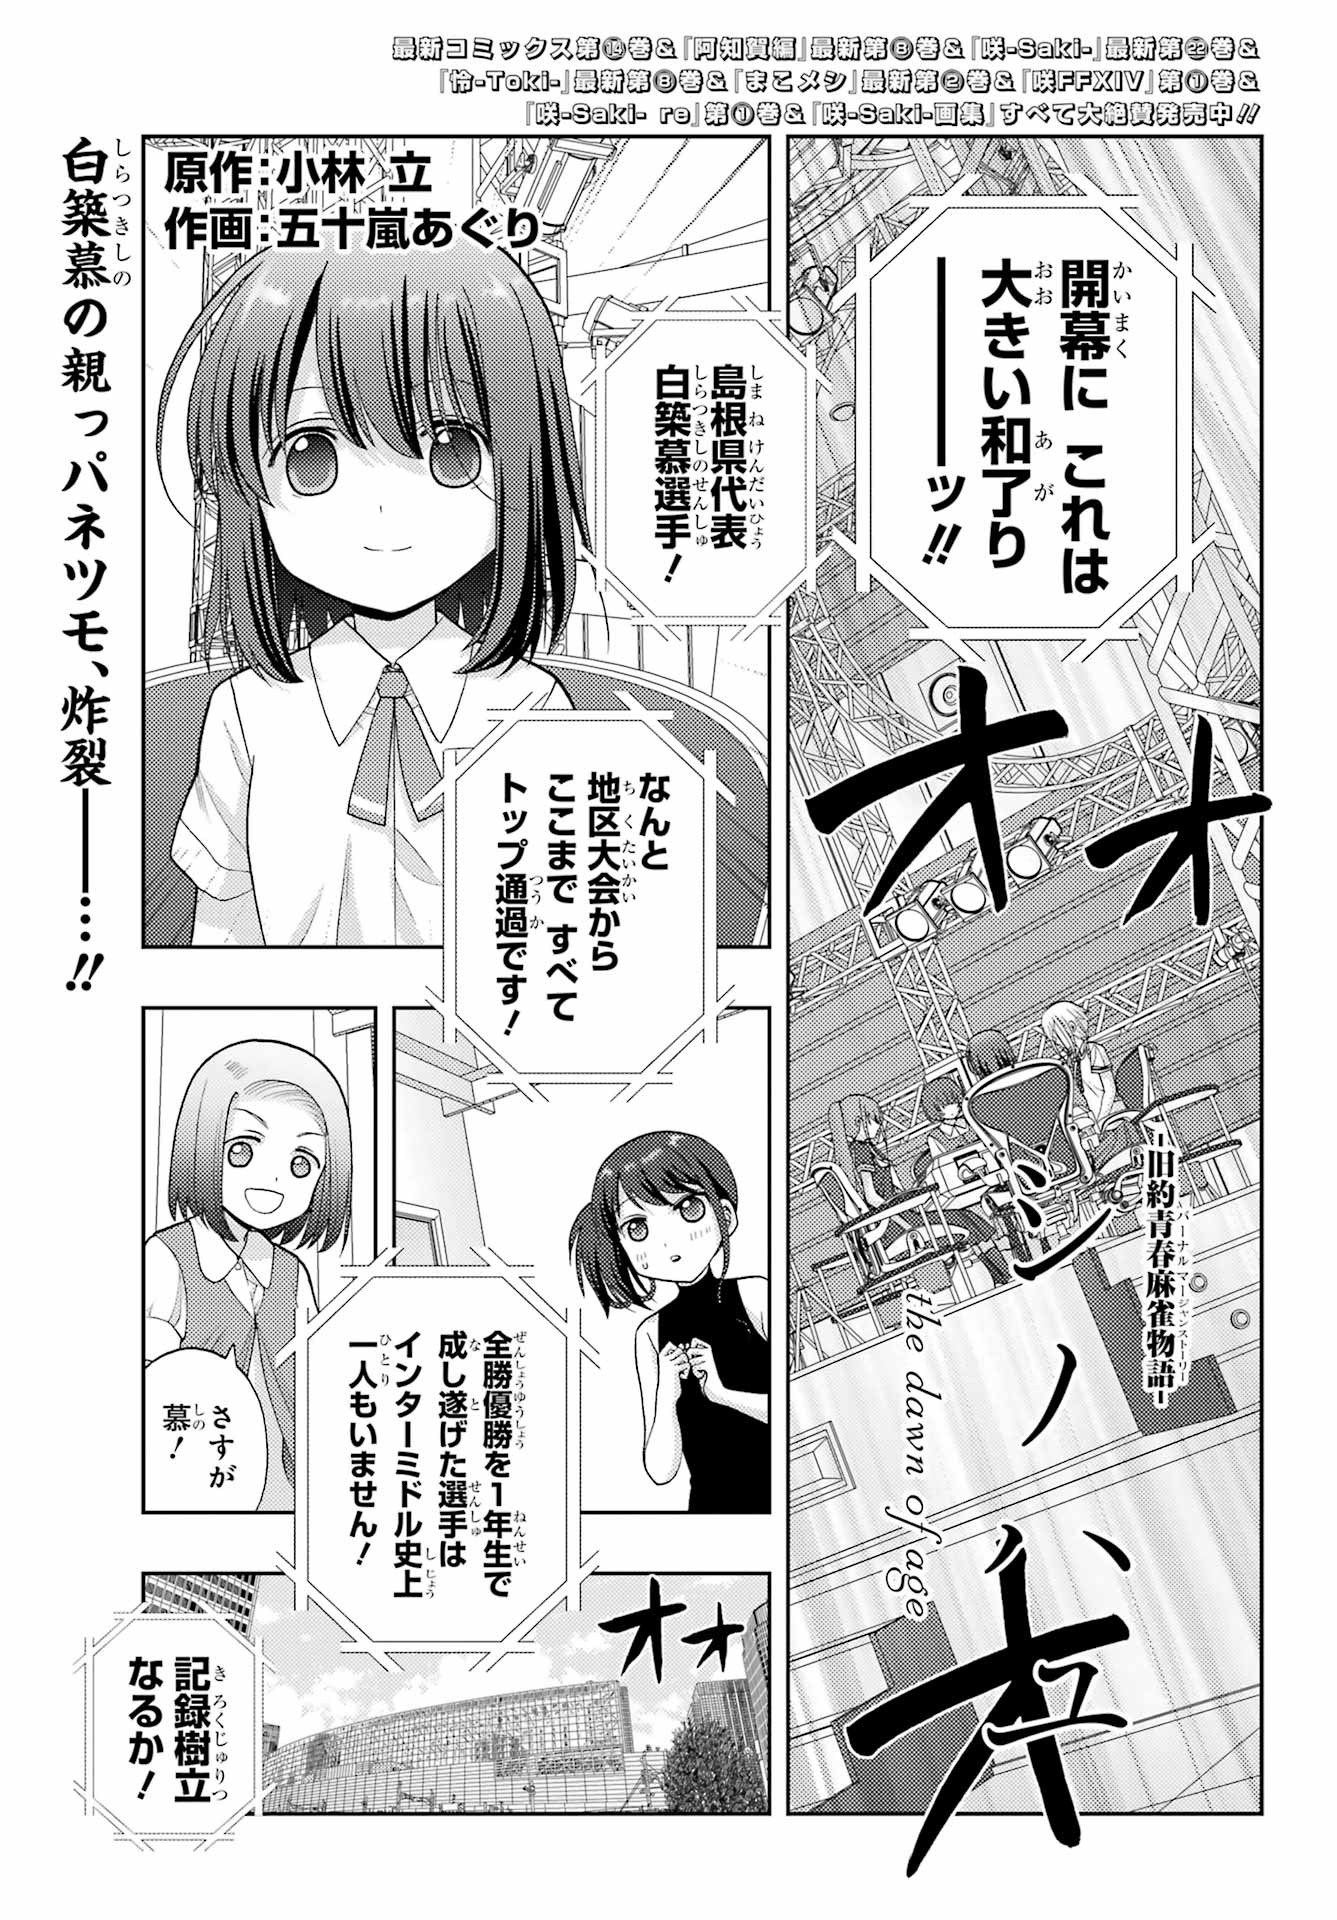 Shinohayu - The Dawn of Age Manga - Chapter 095 - Page 1